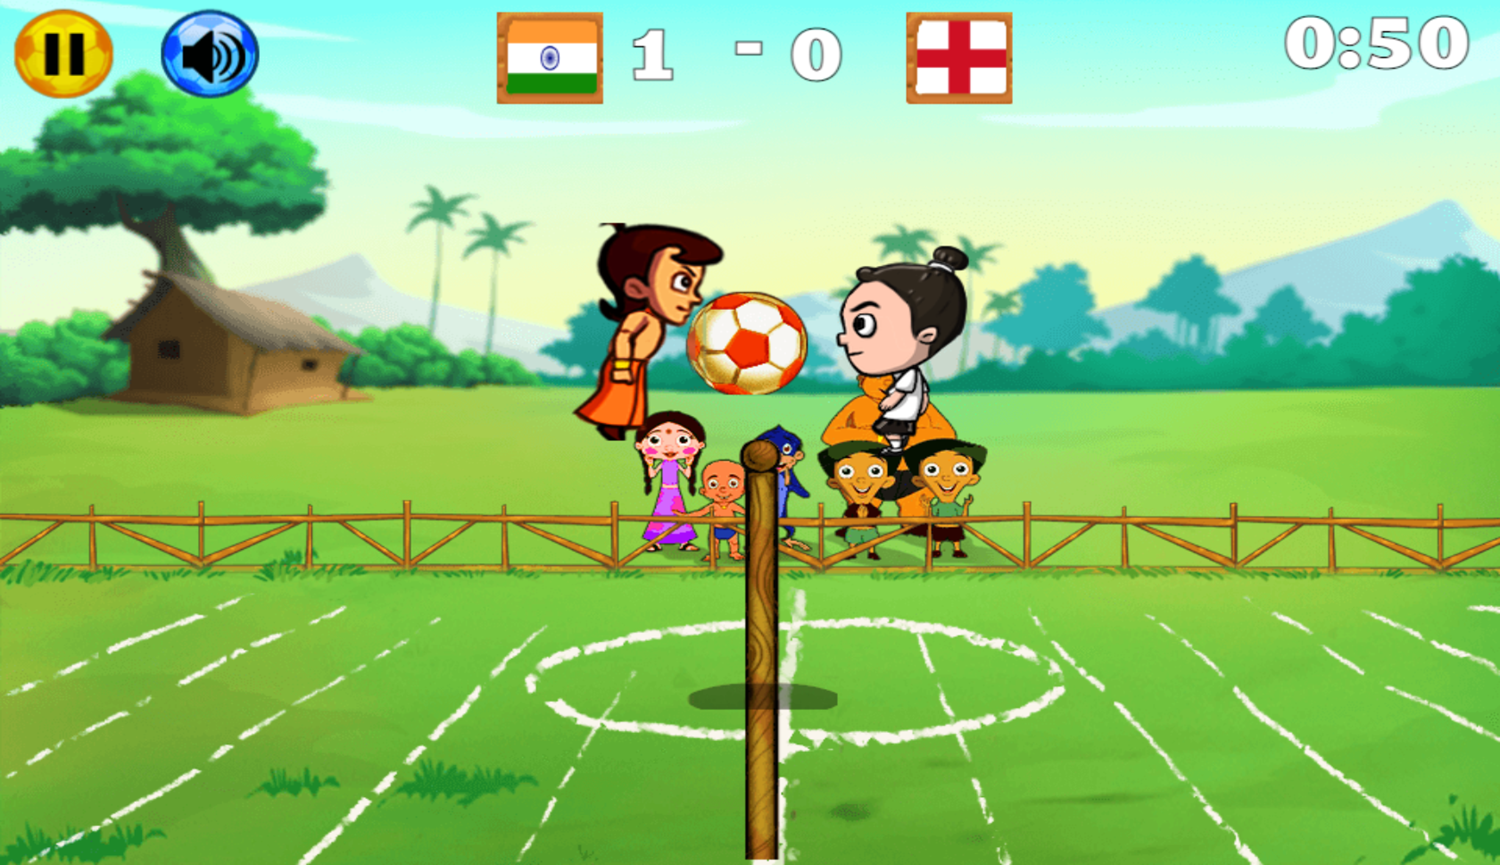 Chhota Bheem and Header Football Competition Game Play Screenshot.